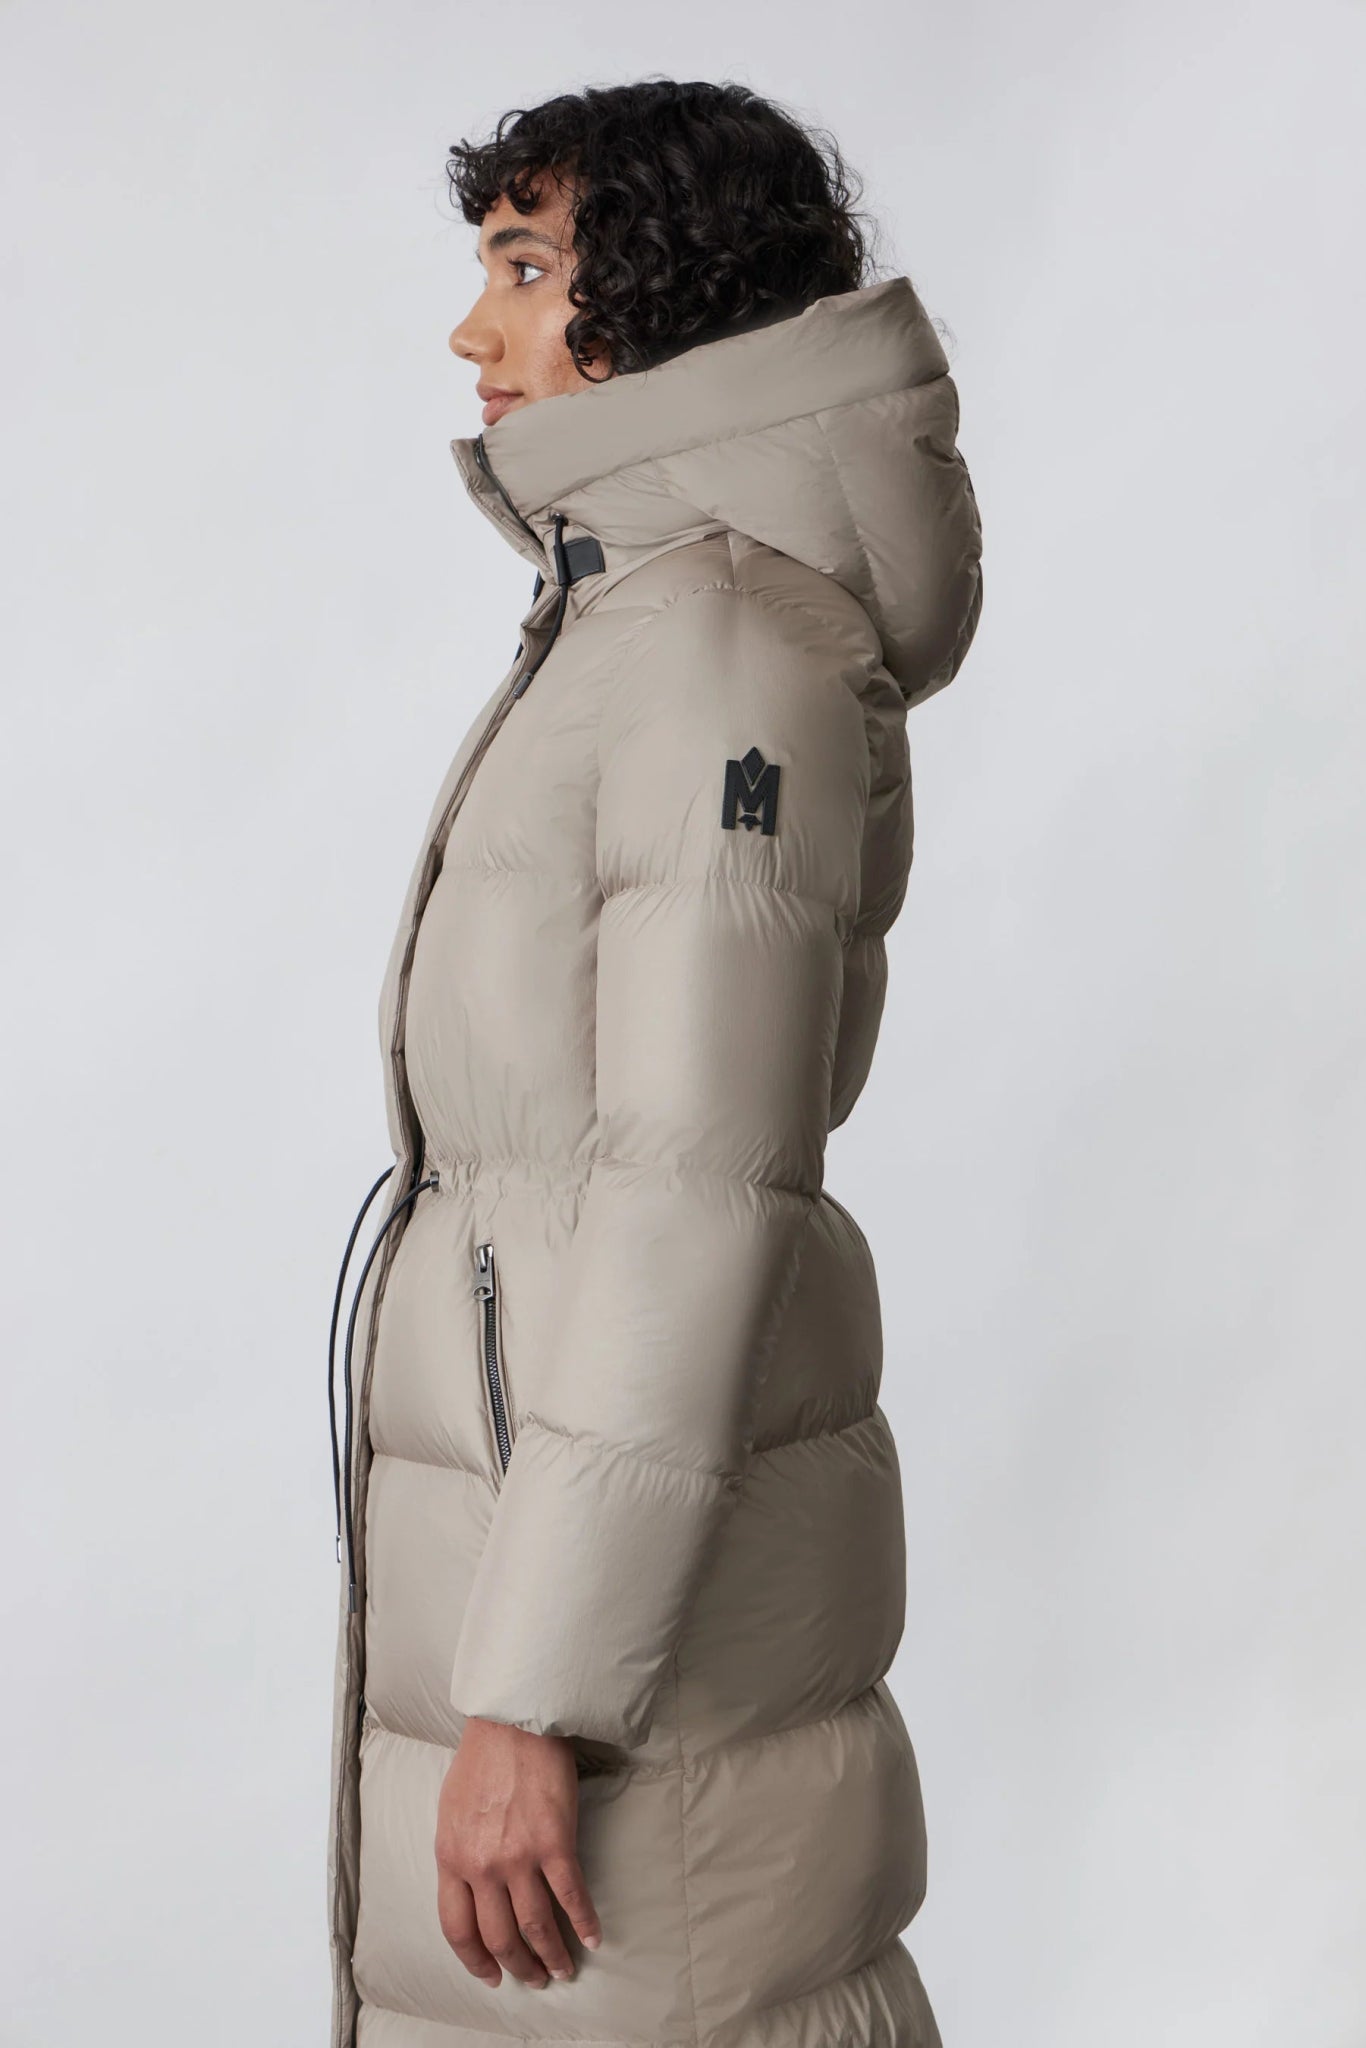 MACKAGE ISHANI - foil shield long down coat with hood - Boutique Bubbles